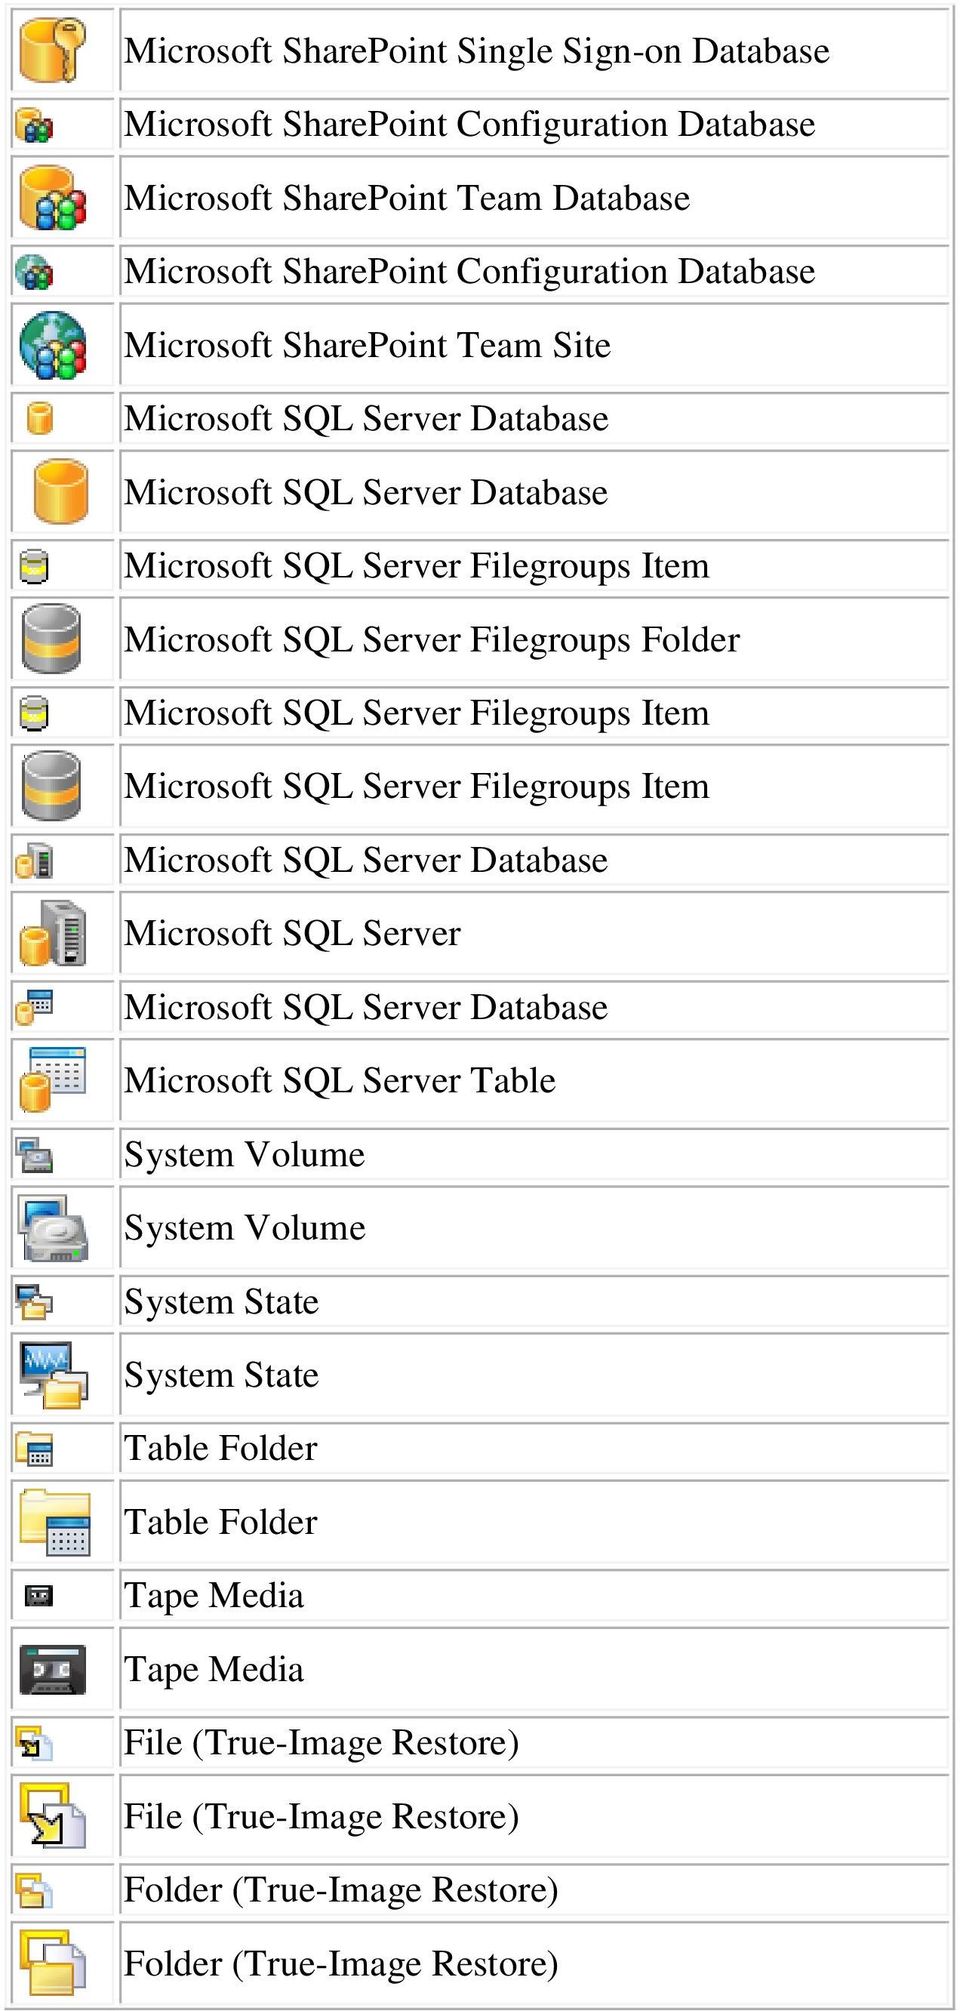 Filegroups Item Microsoft SQL Server Filegroups Item Microsoft SQL Server Database Microsoft SQL Server Microsoft SQL Server Database Microsoft SQL Server Table System Volume System